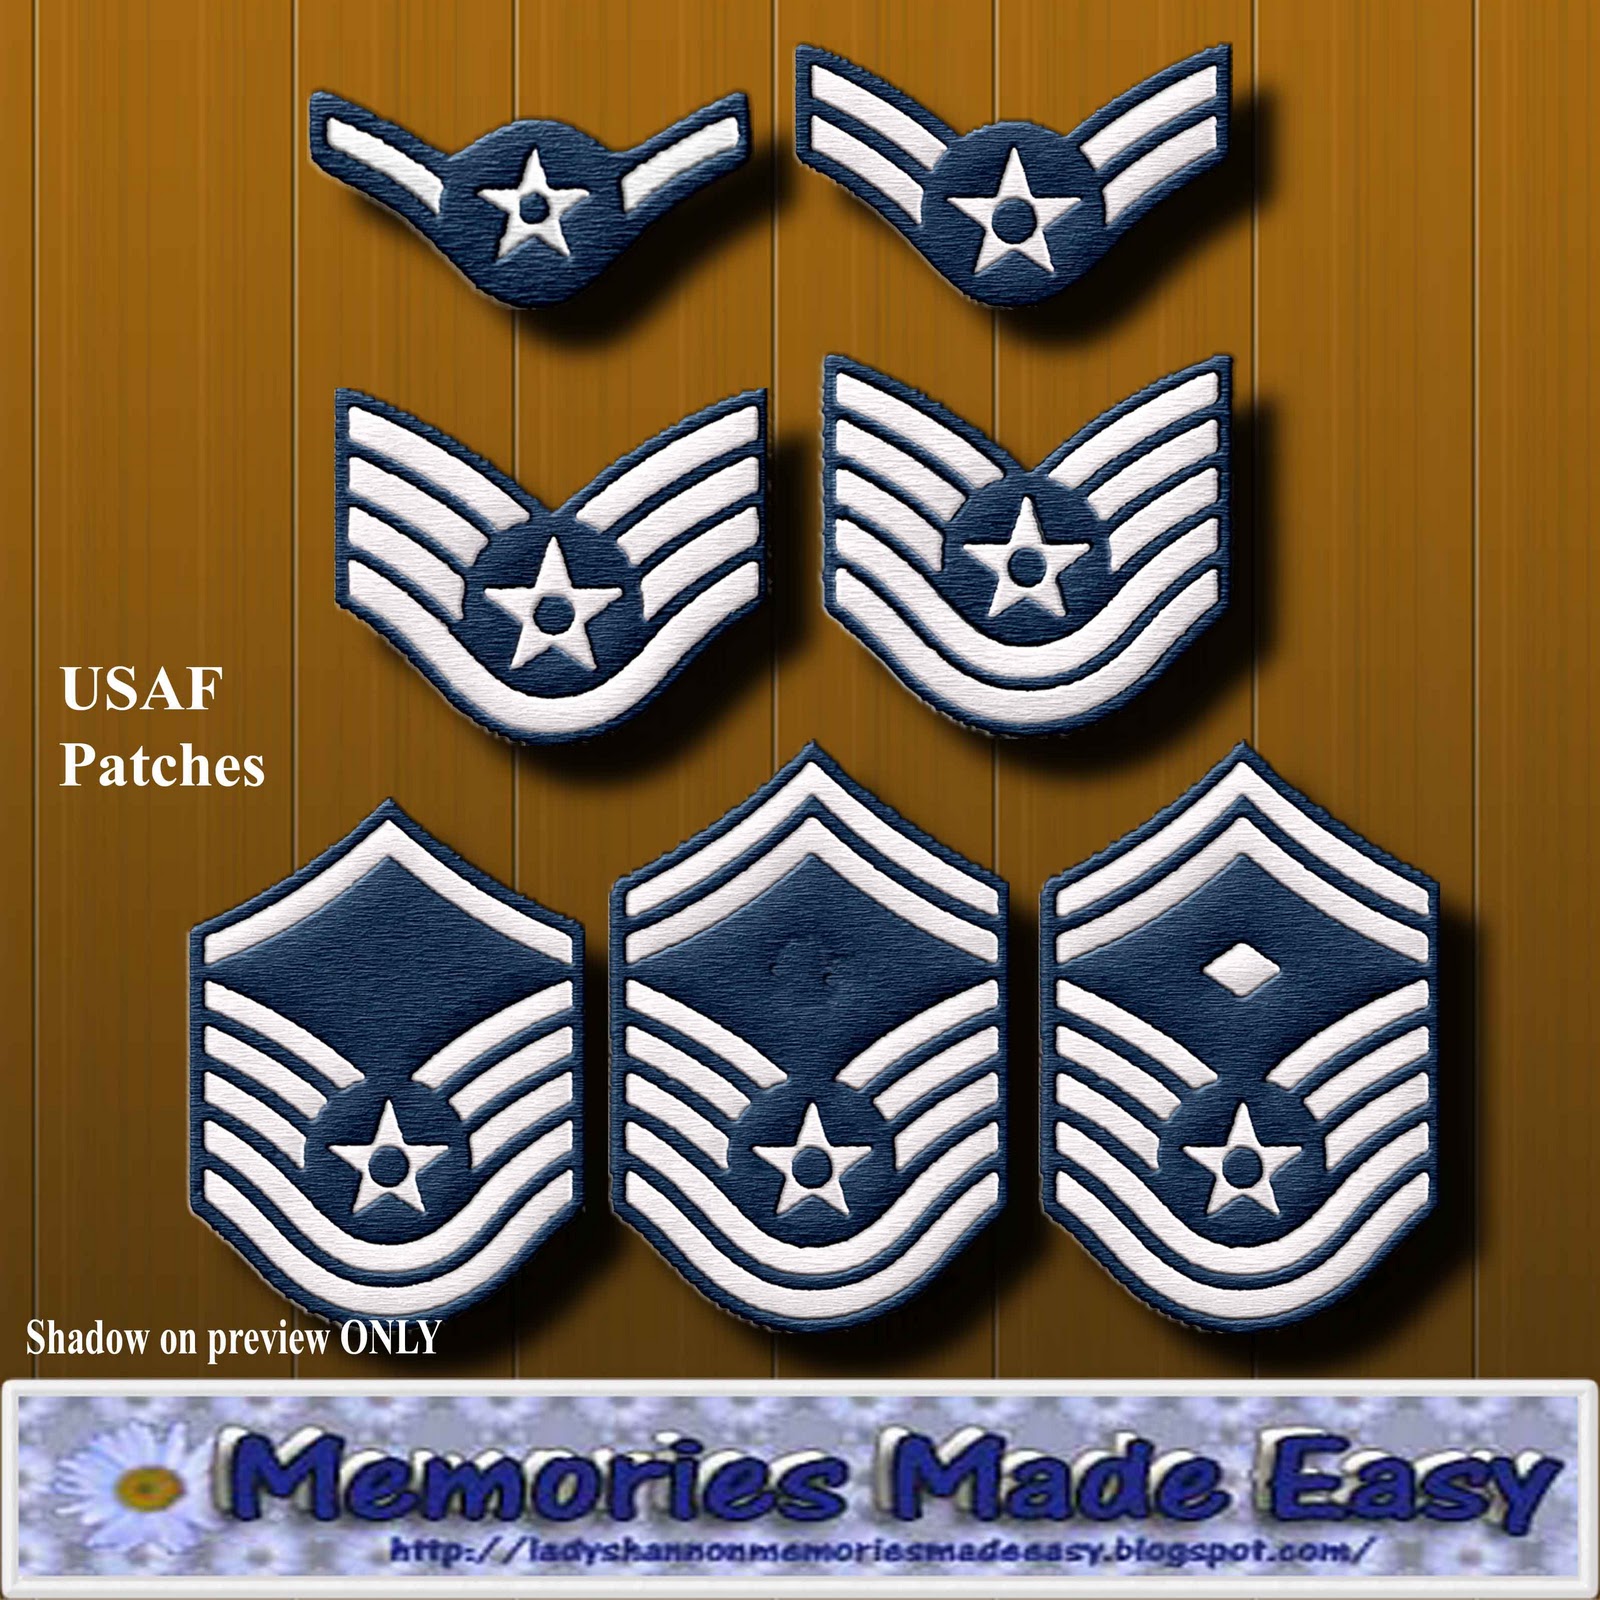 Memories Made Easy: USAF